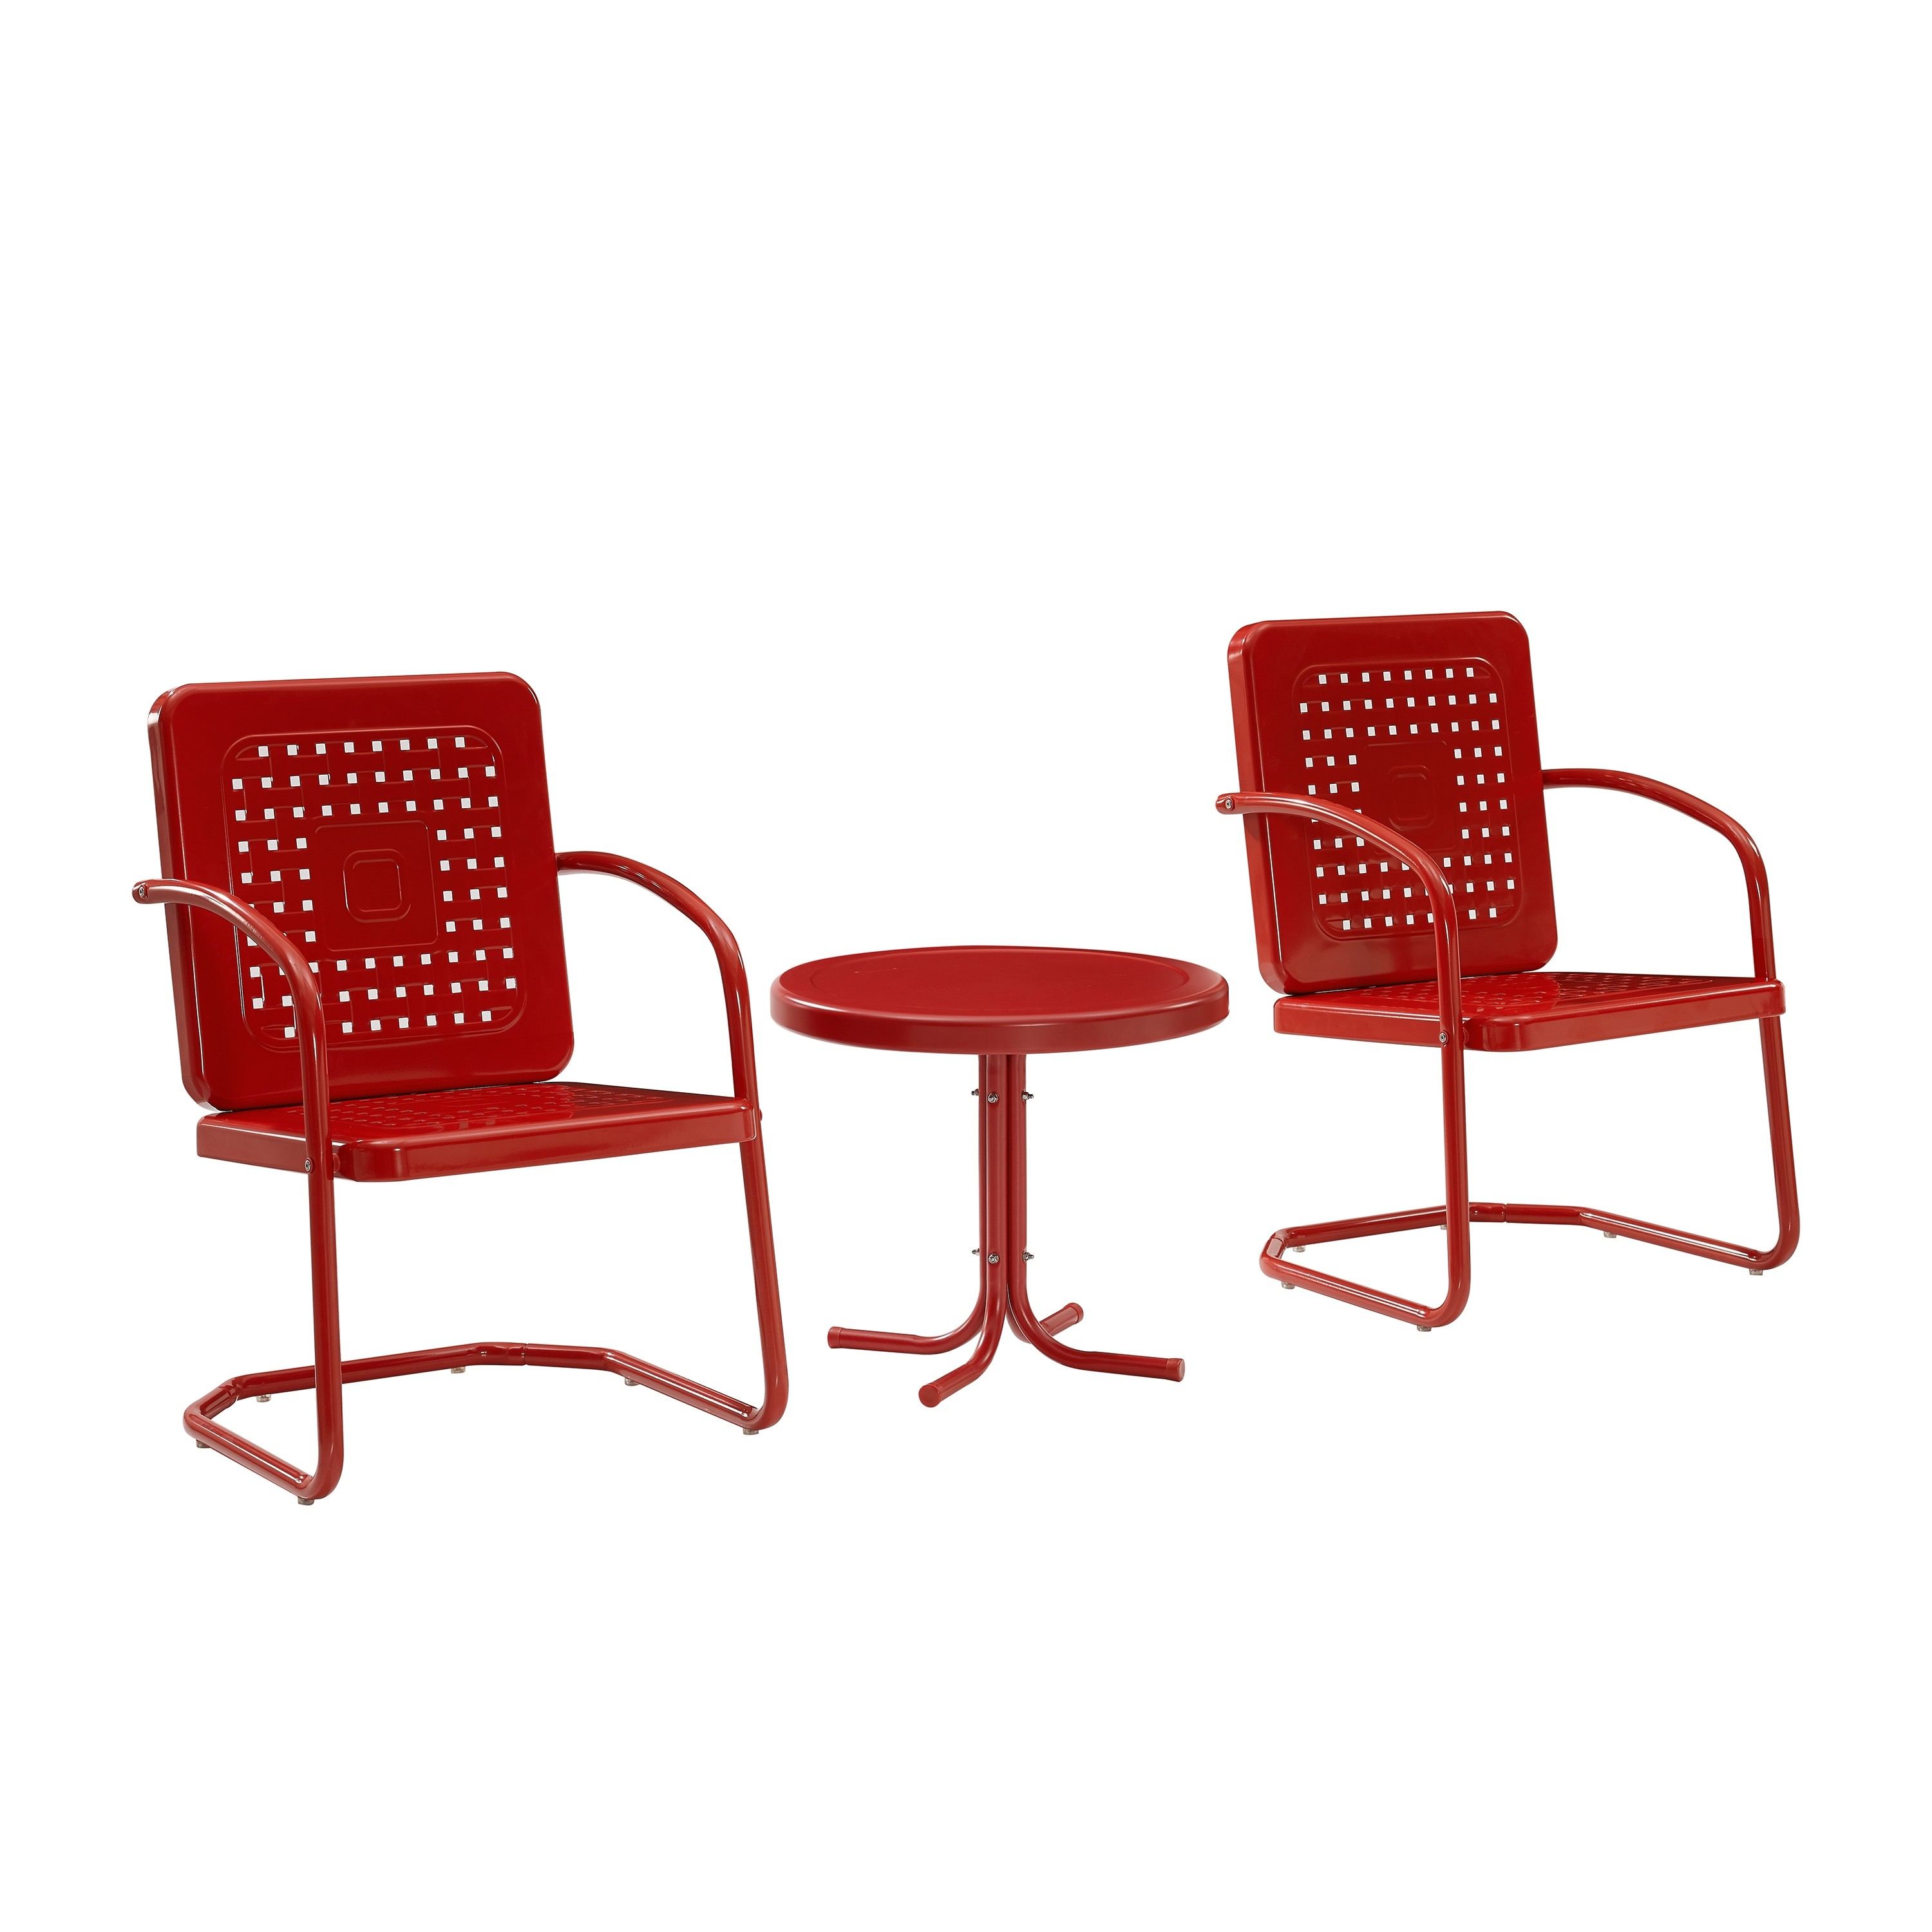 Retro Metal Bates 3 Piece Outdoor Chair Set, Retro Red Metal Outdoor Chairs